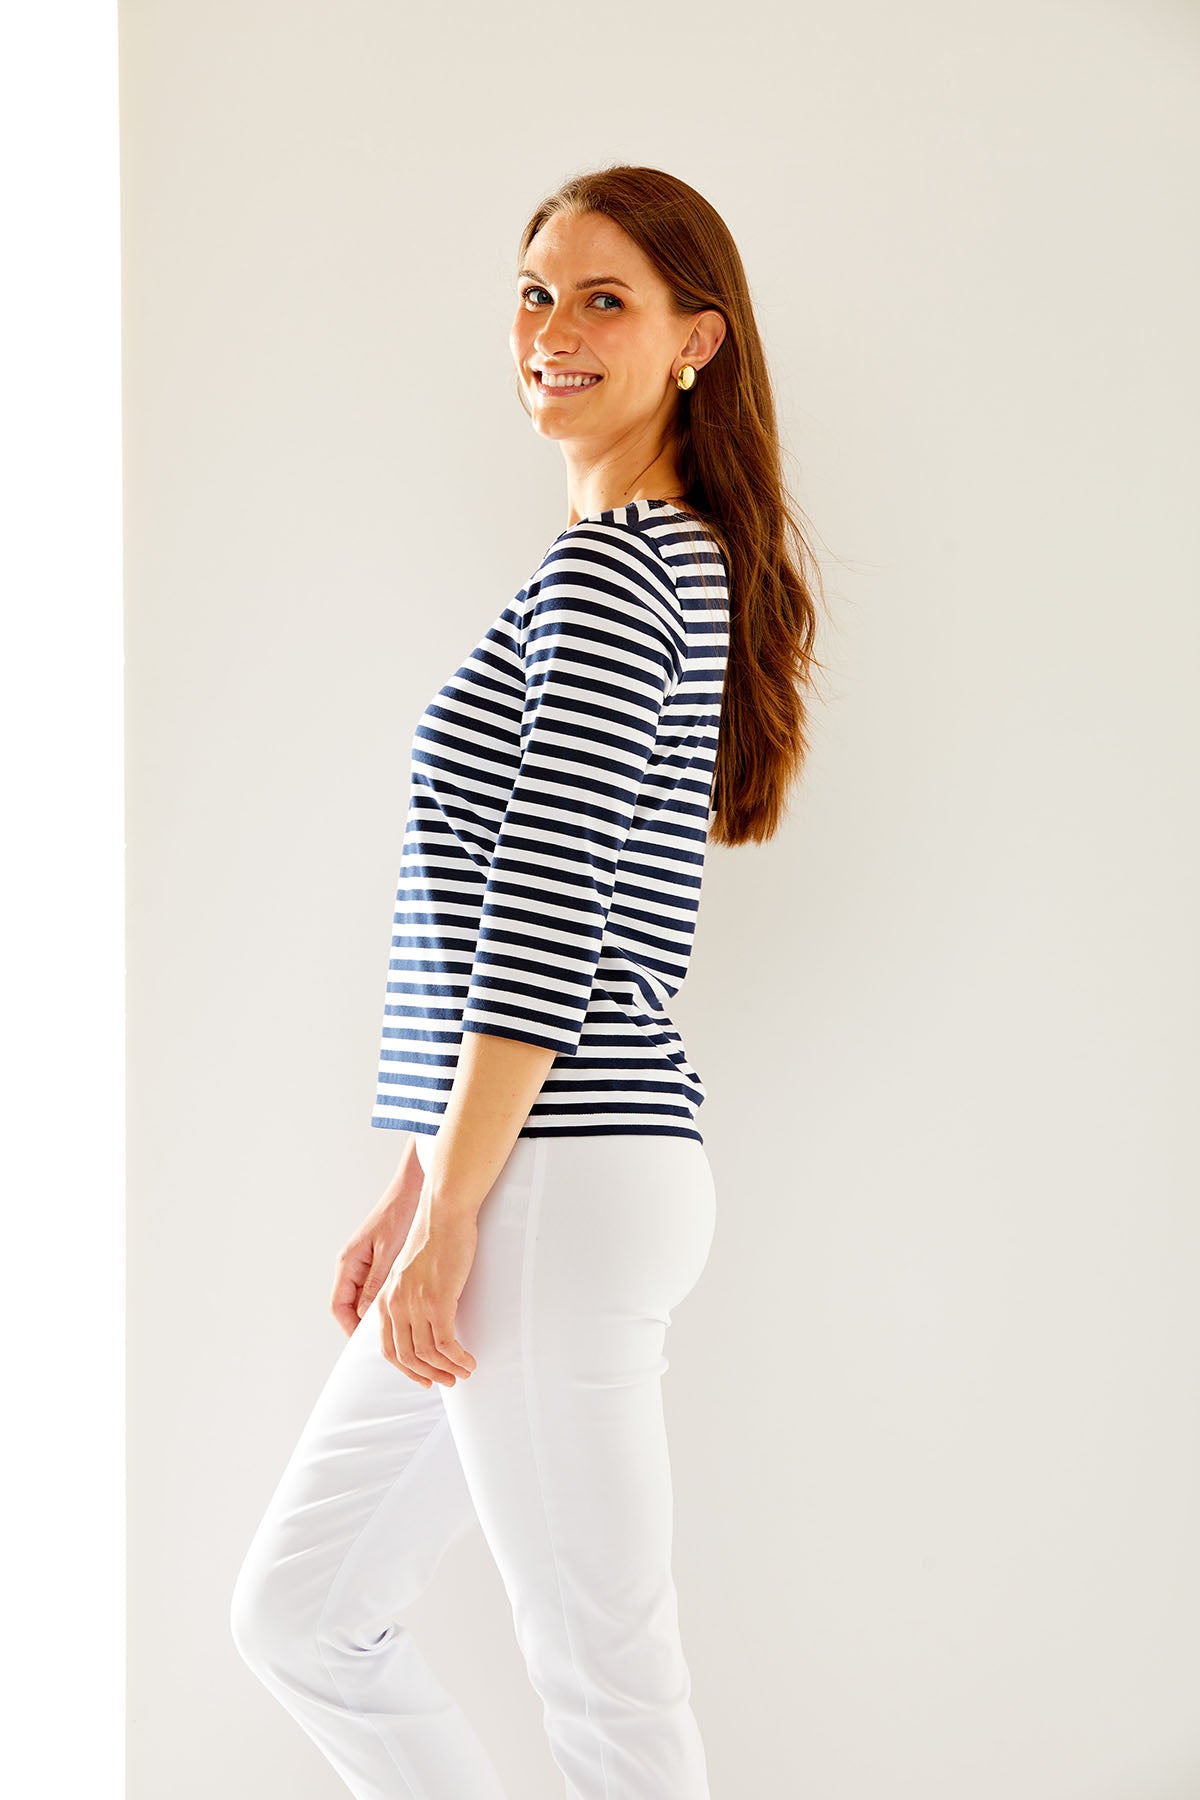 Woman in navy/white stripe top